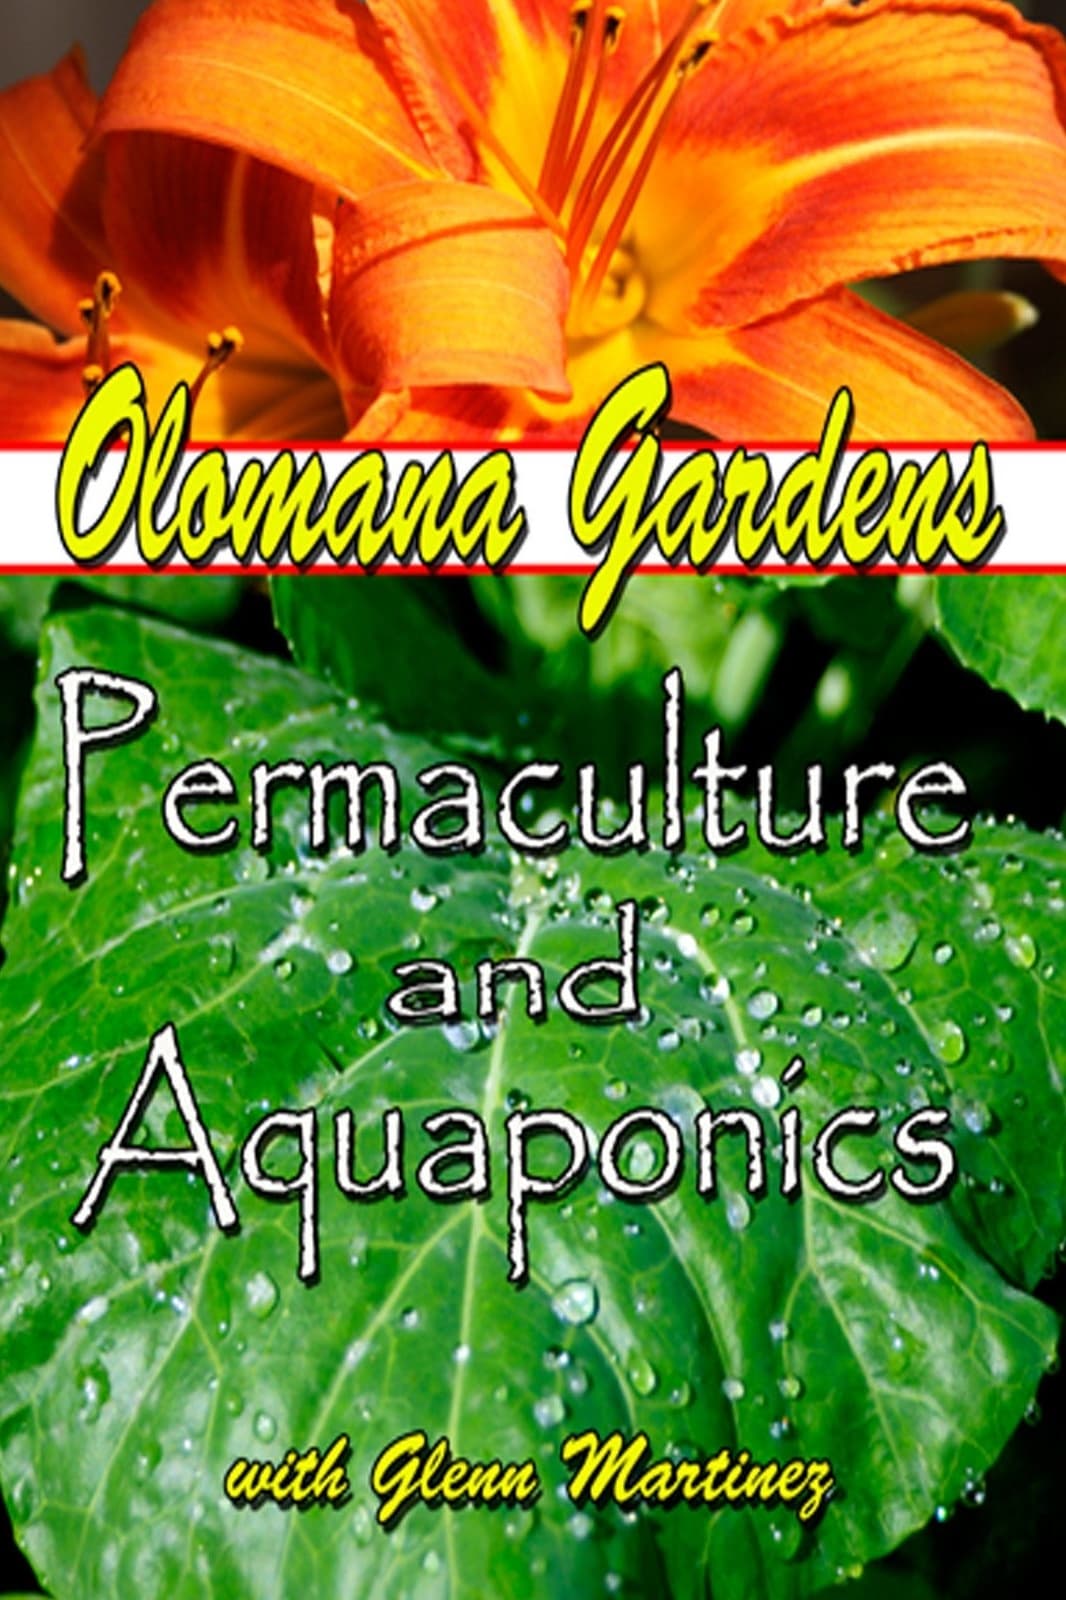 Olomana Gardens Permaculture and Aquaponics